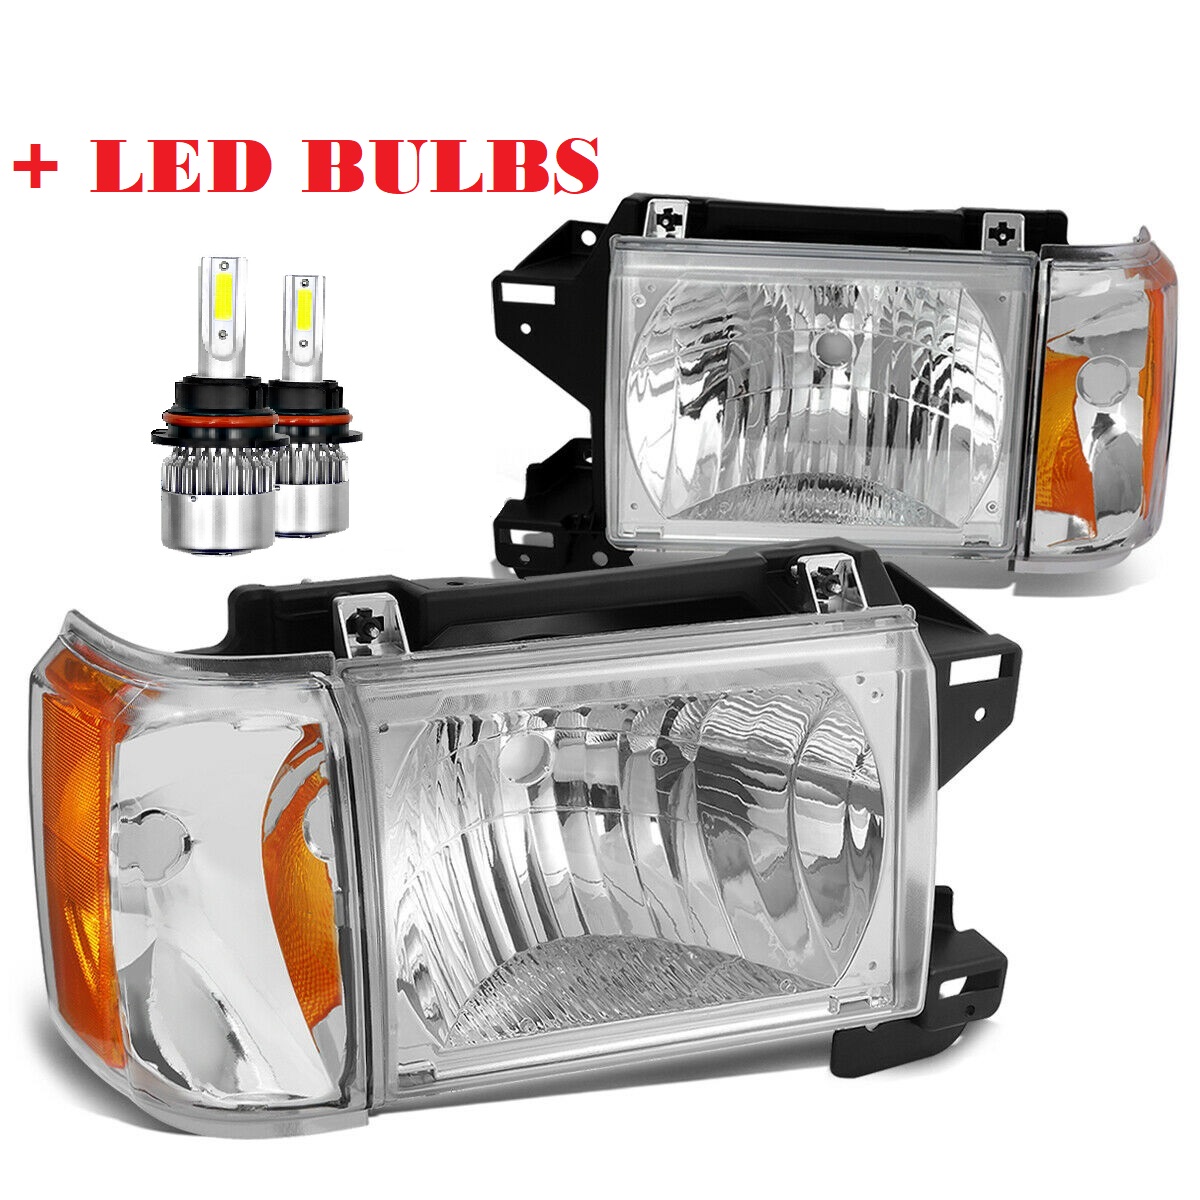 Country Coach Sedona Chrome Headlight & Corner Light Unit Pair + Headlight LED Bulbs (Left & Right)